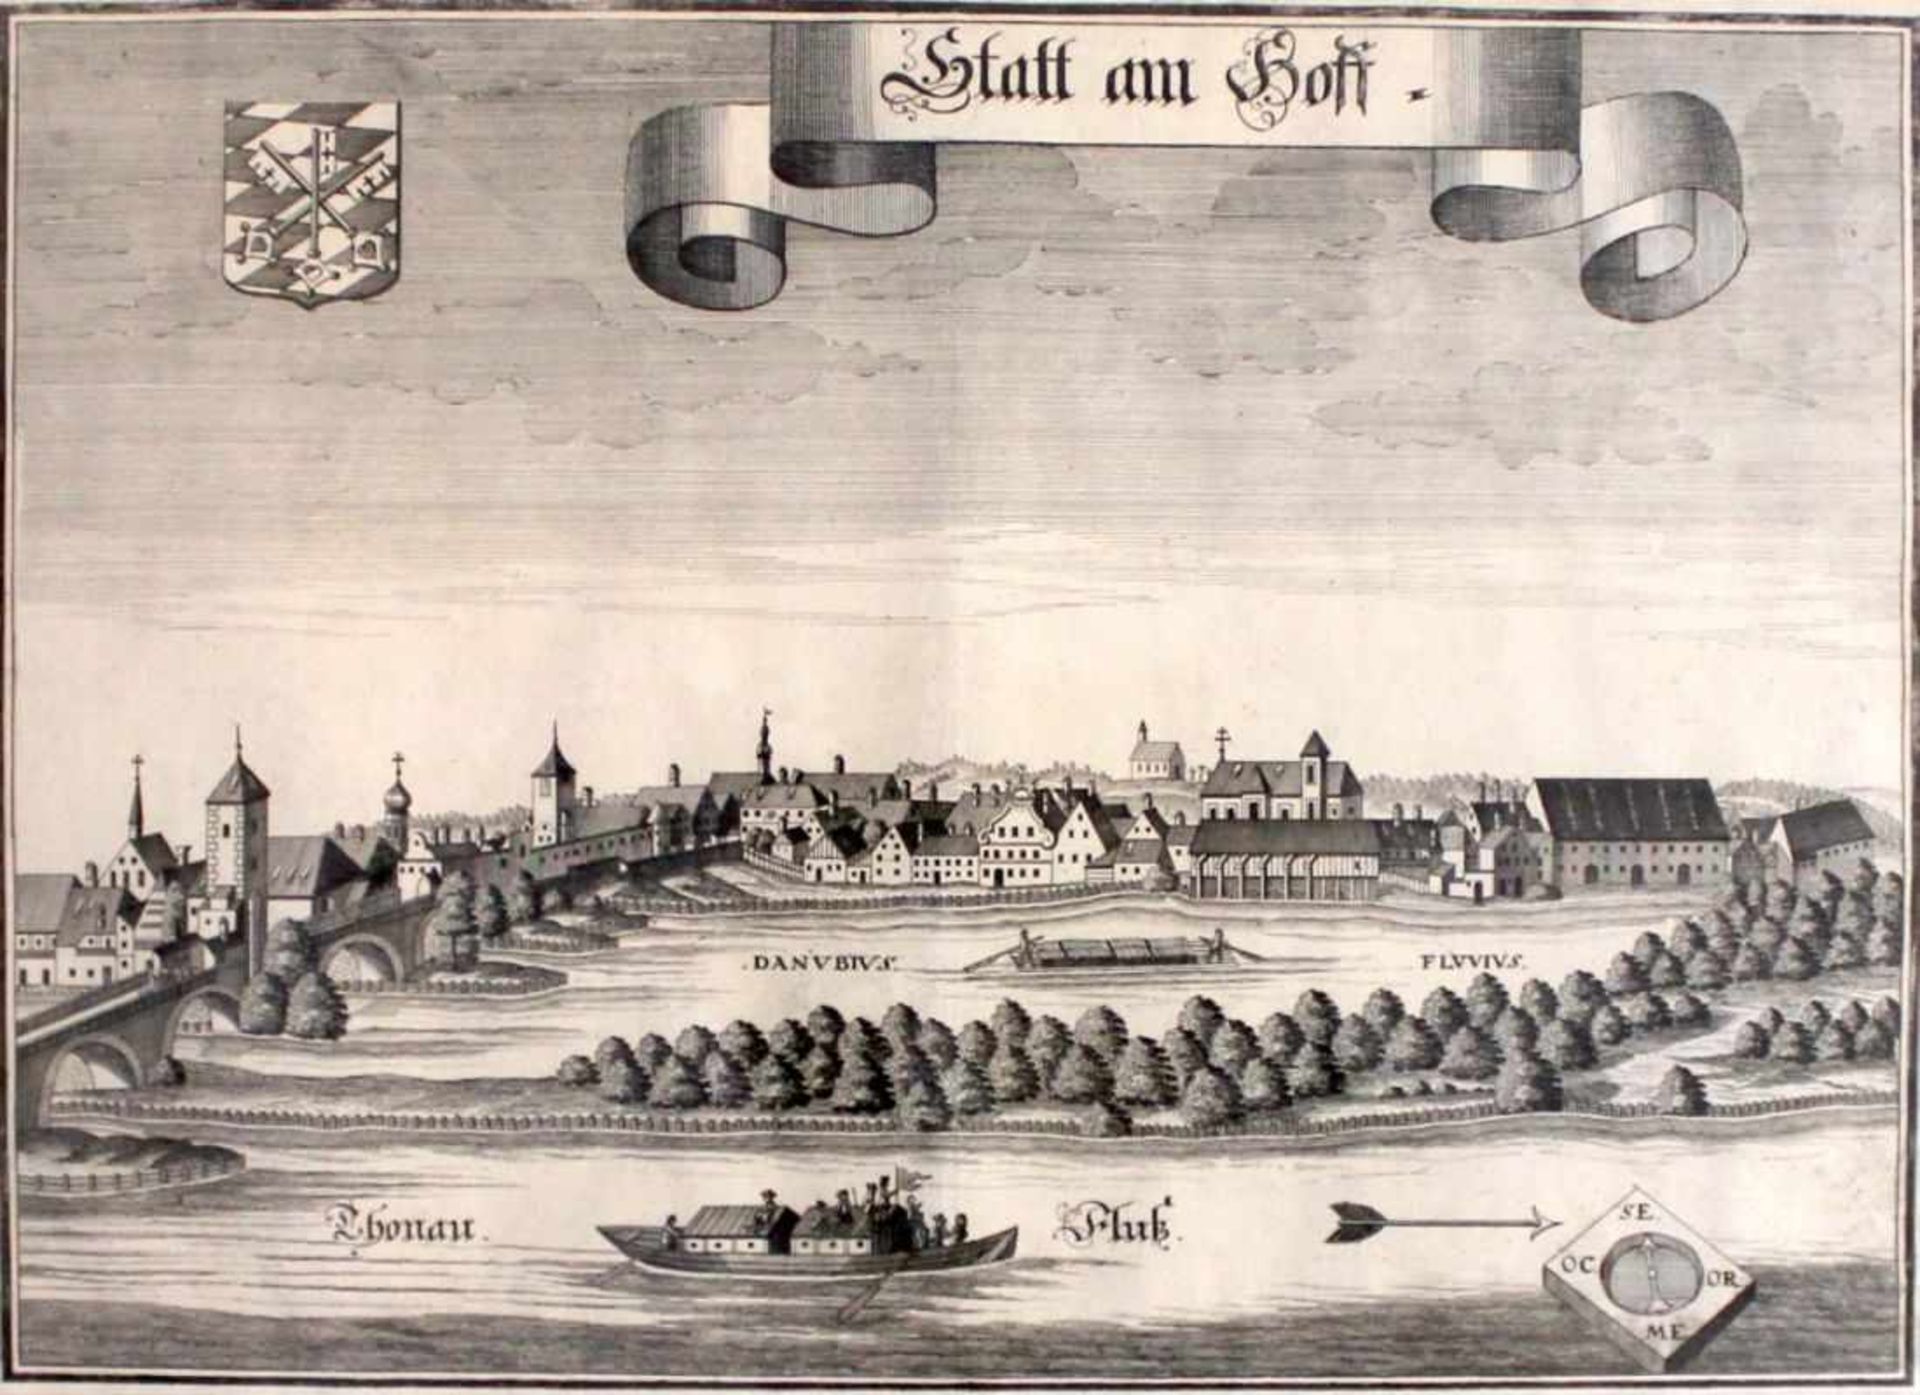 Kupferstich - Michael Wening (1645 Nürnberg - 1718 München) "Regensburg - Statt am Hoff", 1726, Maße